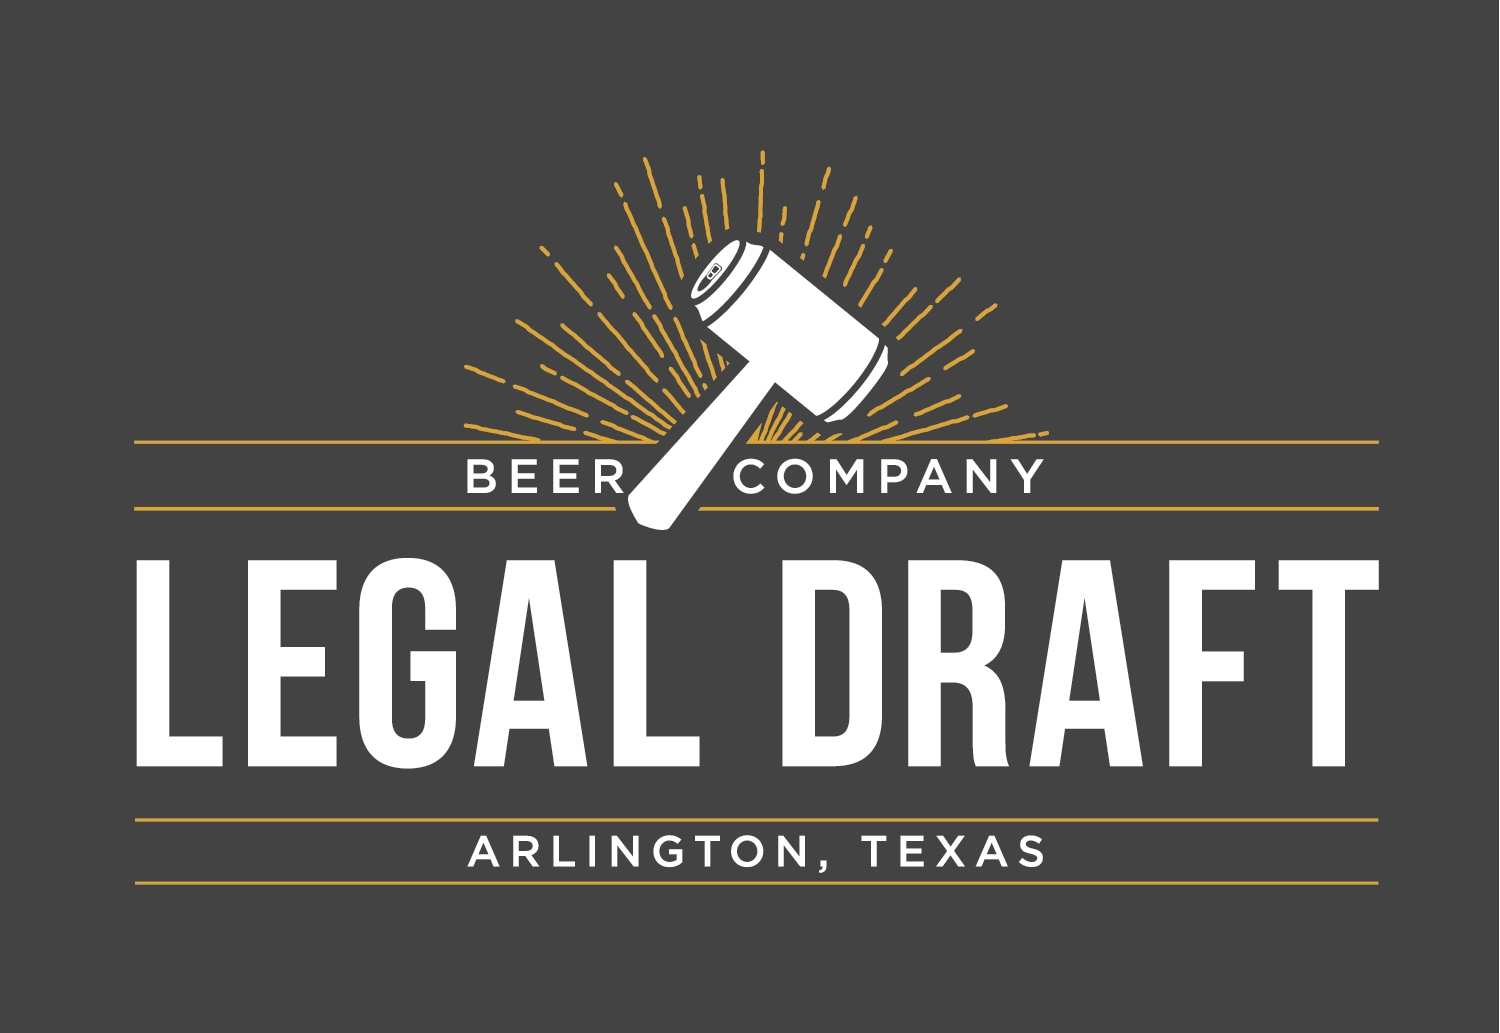 Press — Legal Draft Beer Company